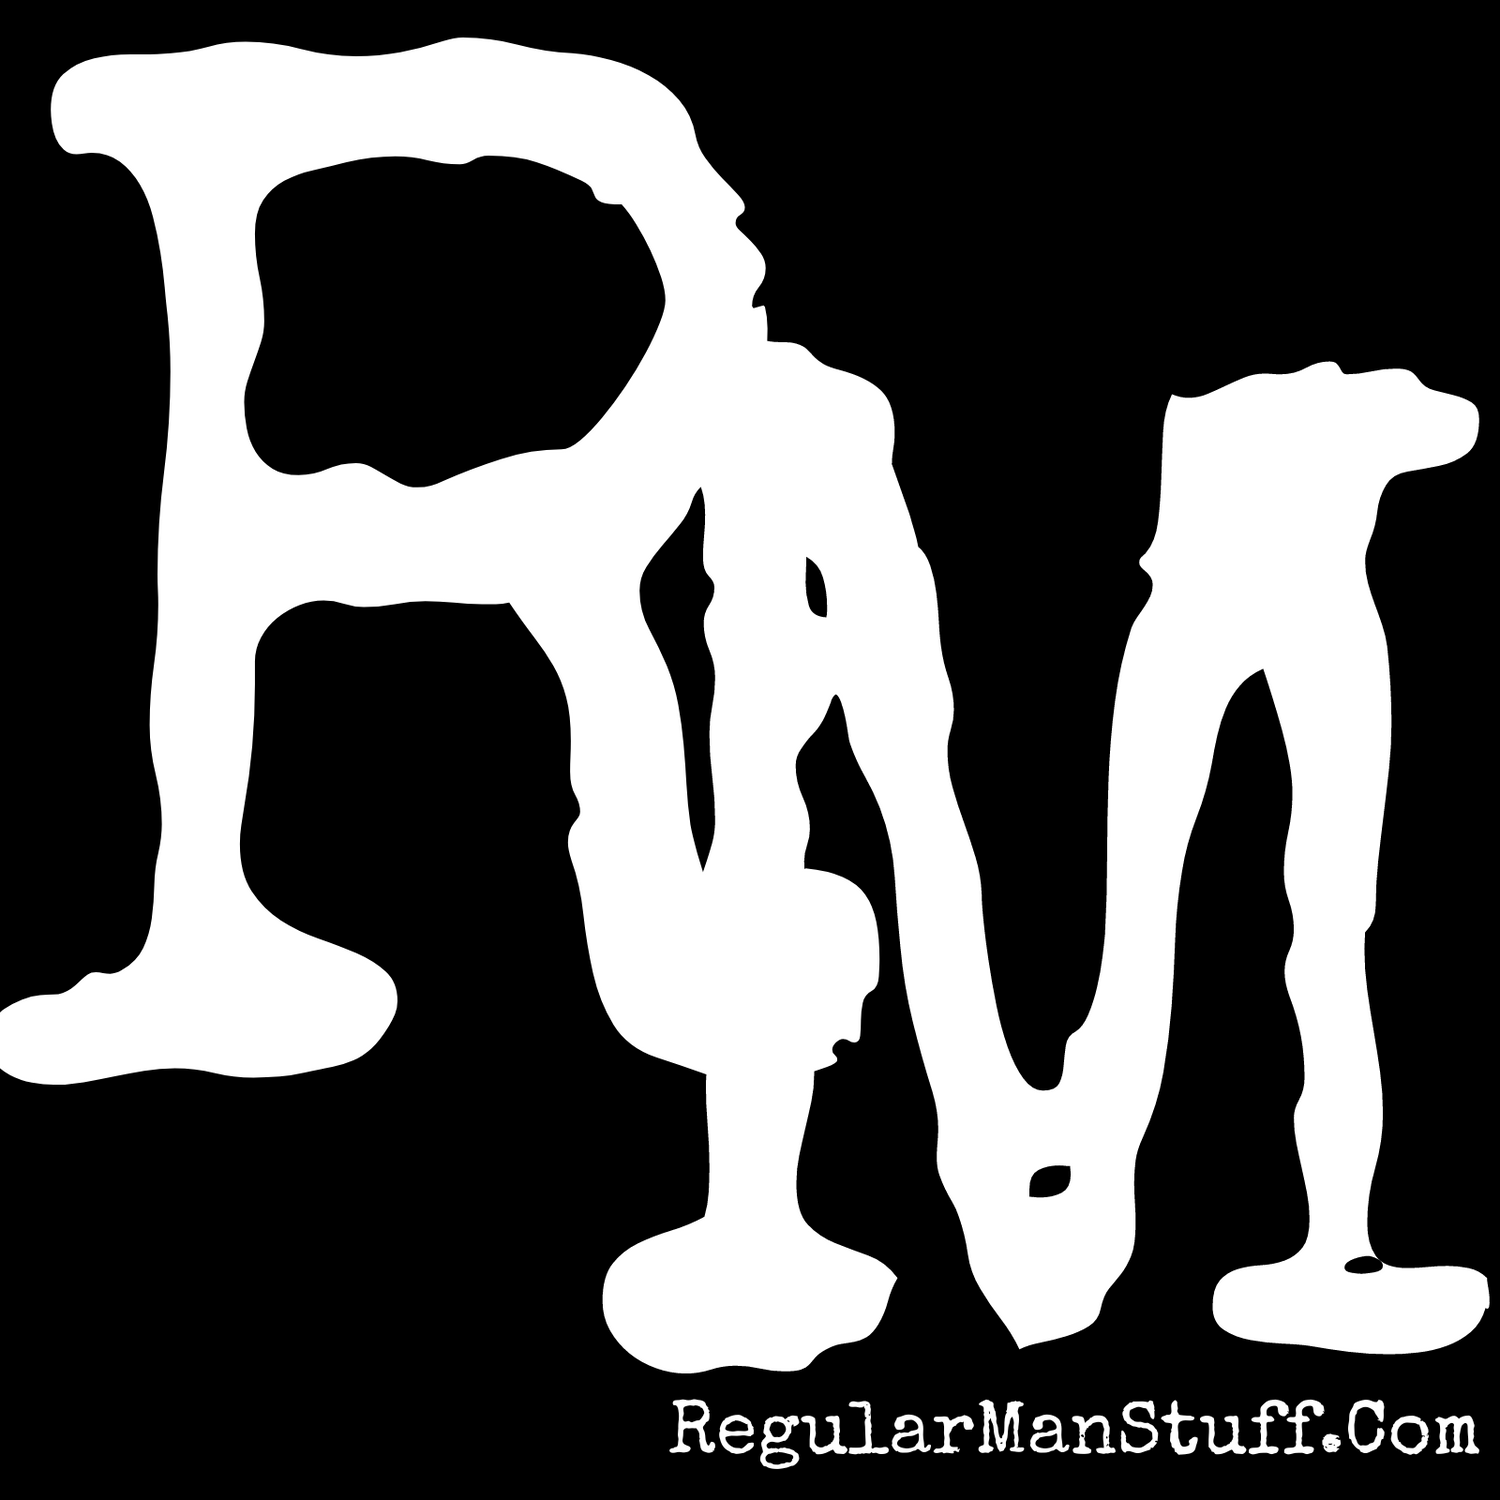 RM Regular Man